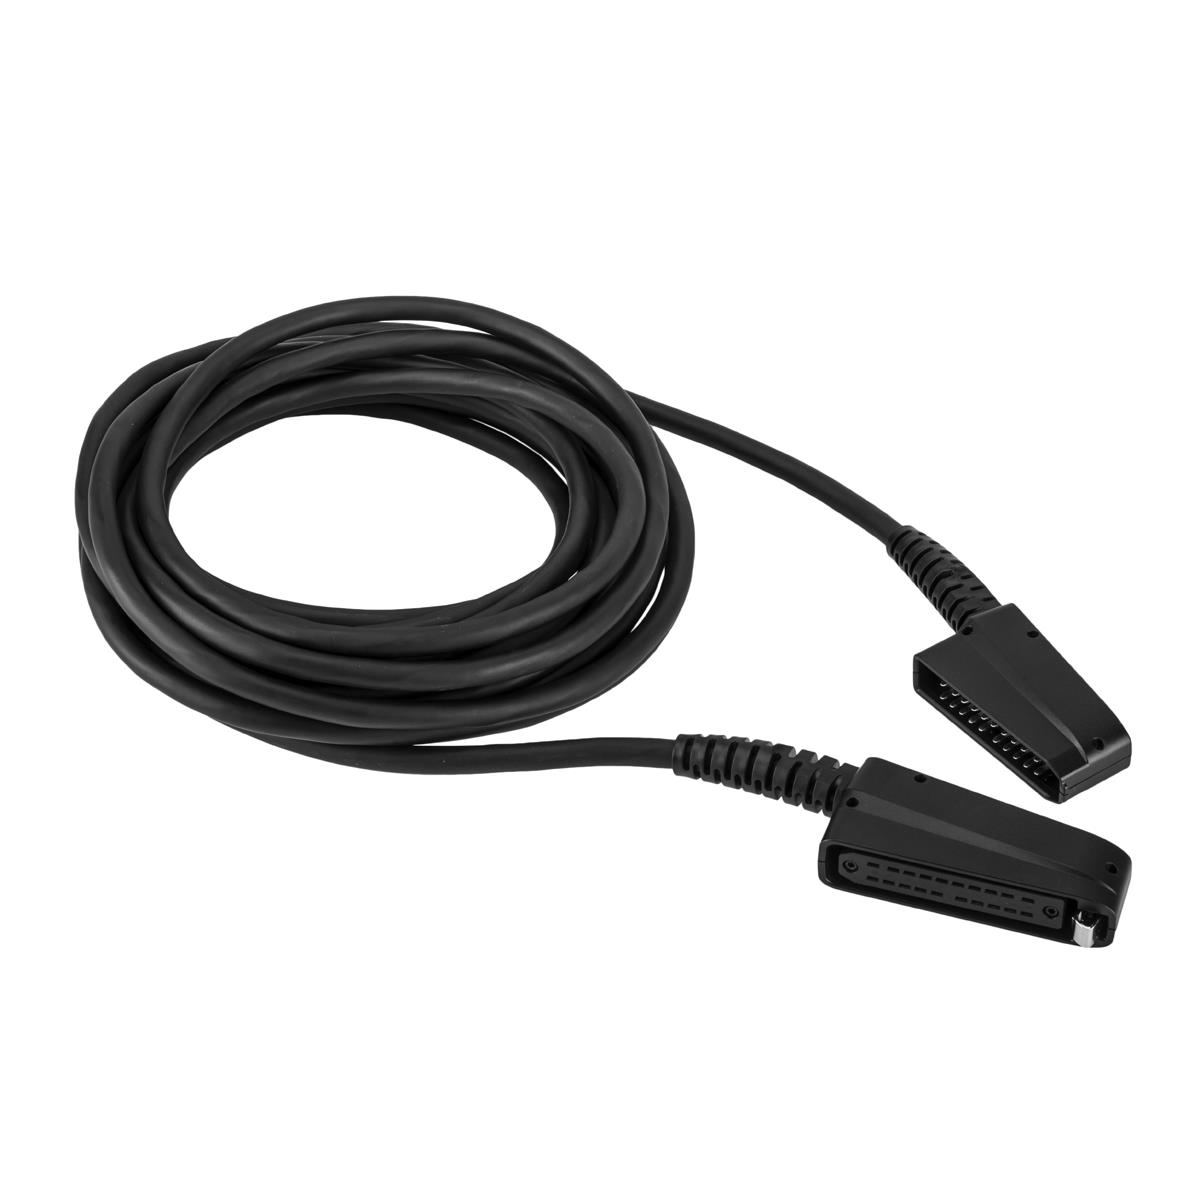 Image of Flashpoint EC2400L 32.8ft Extension Cable for the XPLOR Power 2400 Pro